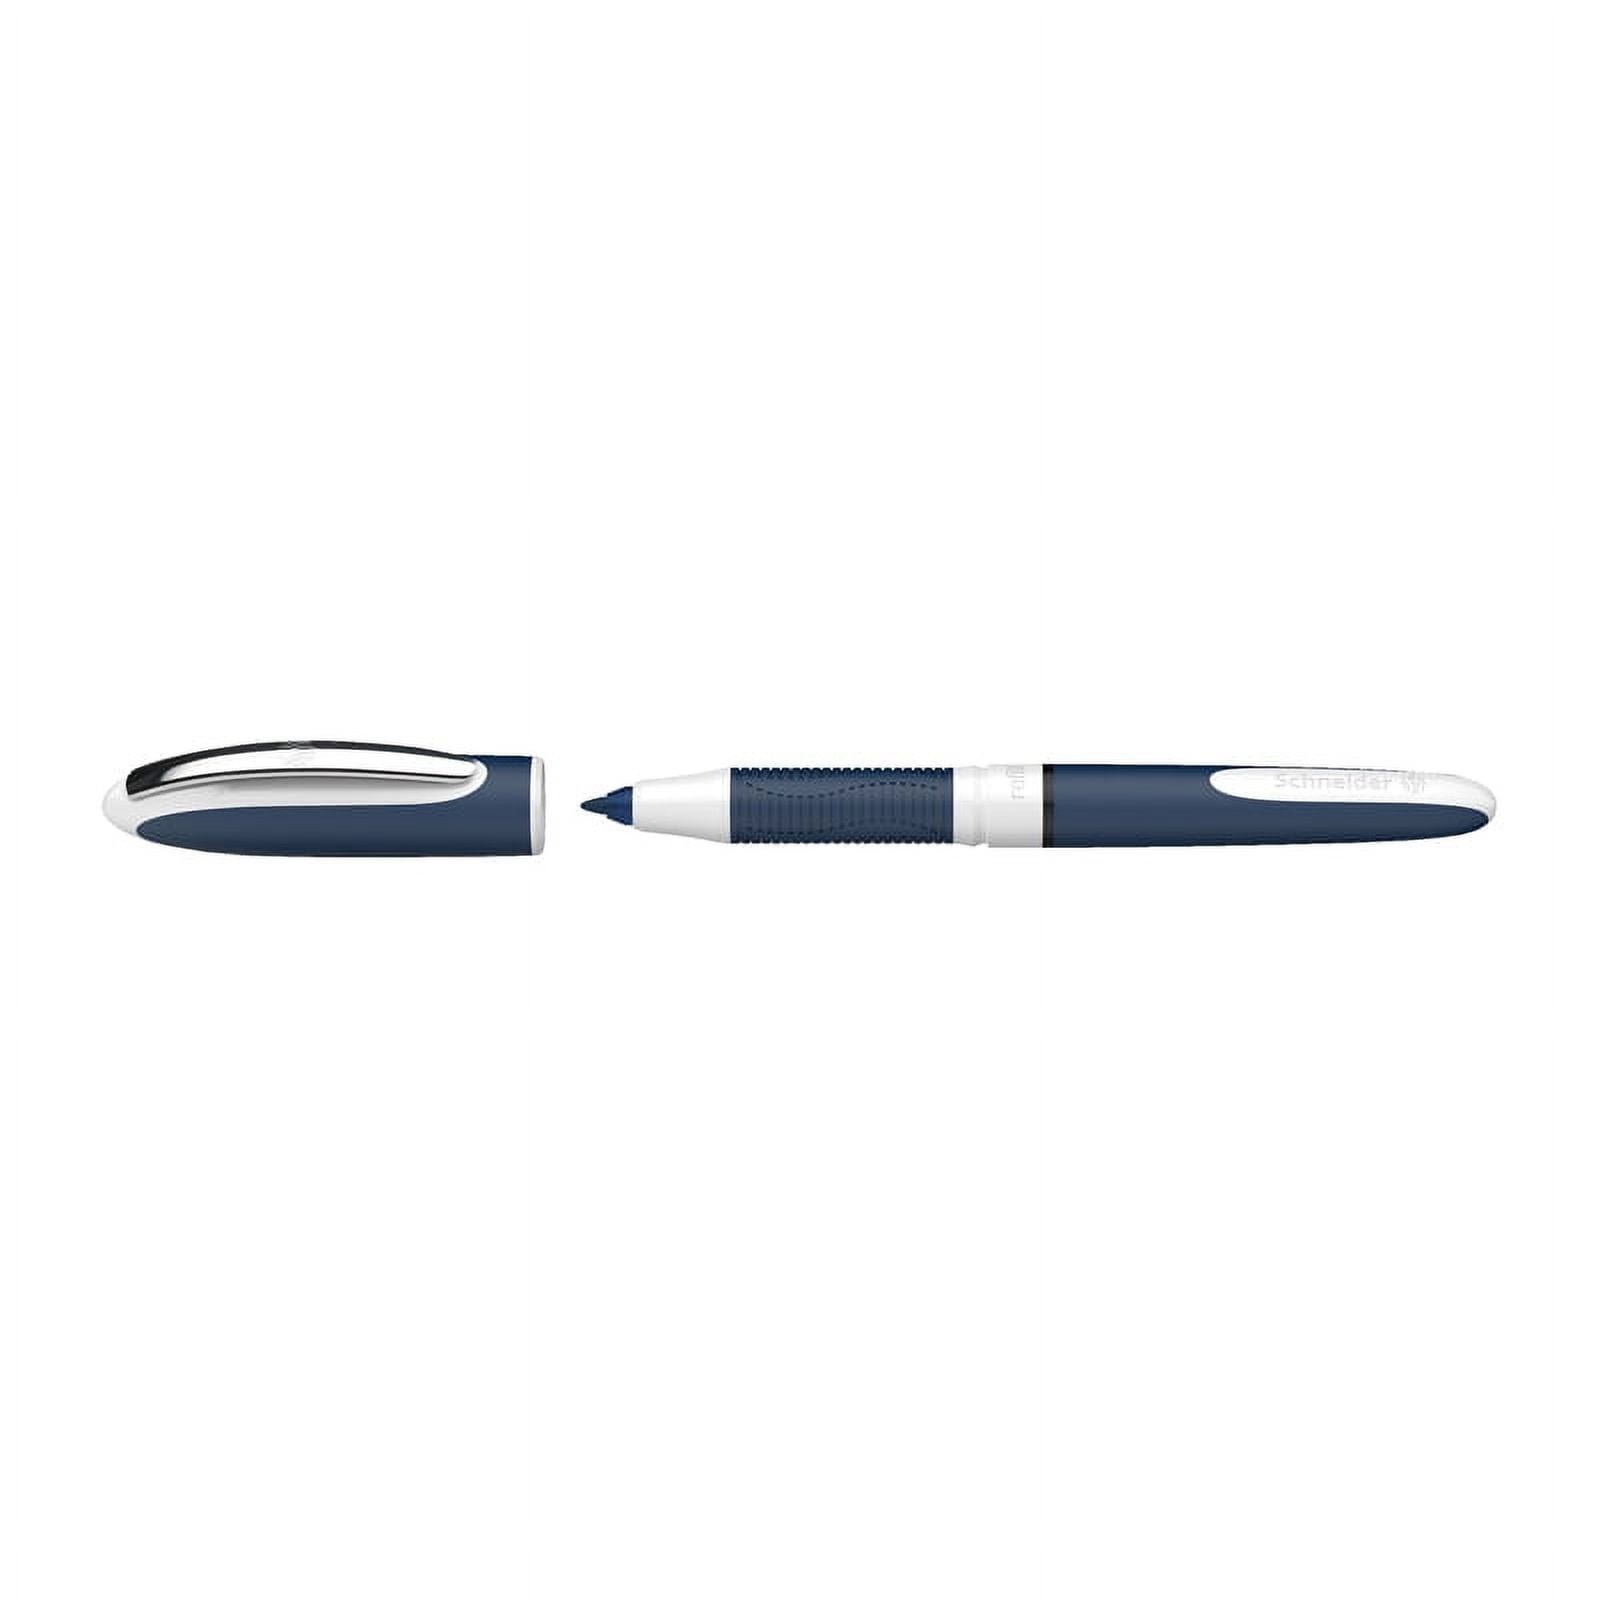 One Change Rollerball Pen, Refillable, 0.6 mm, Black Ink, Single Pen |  Bundle of 10 Each